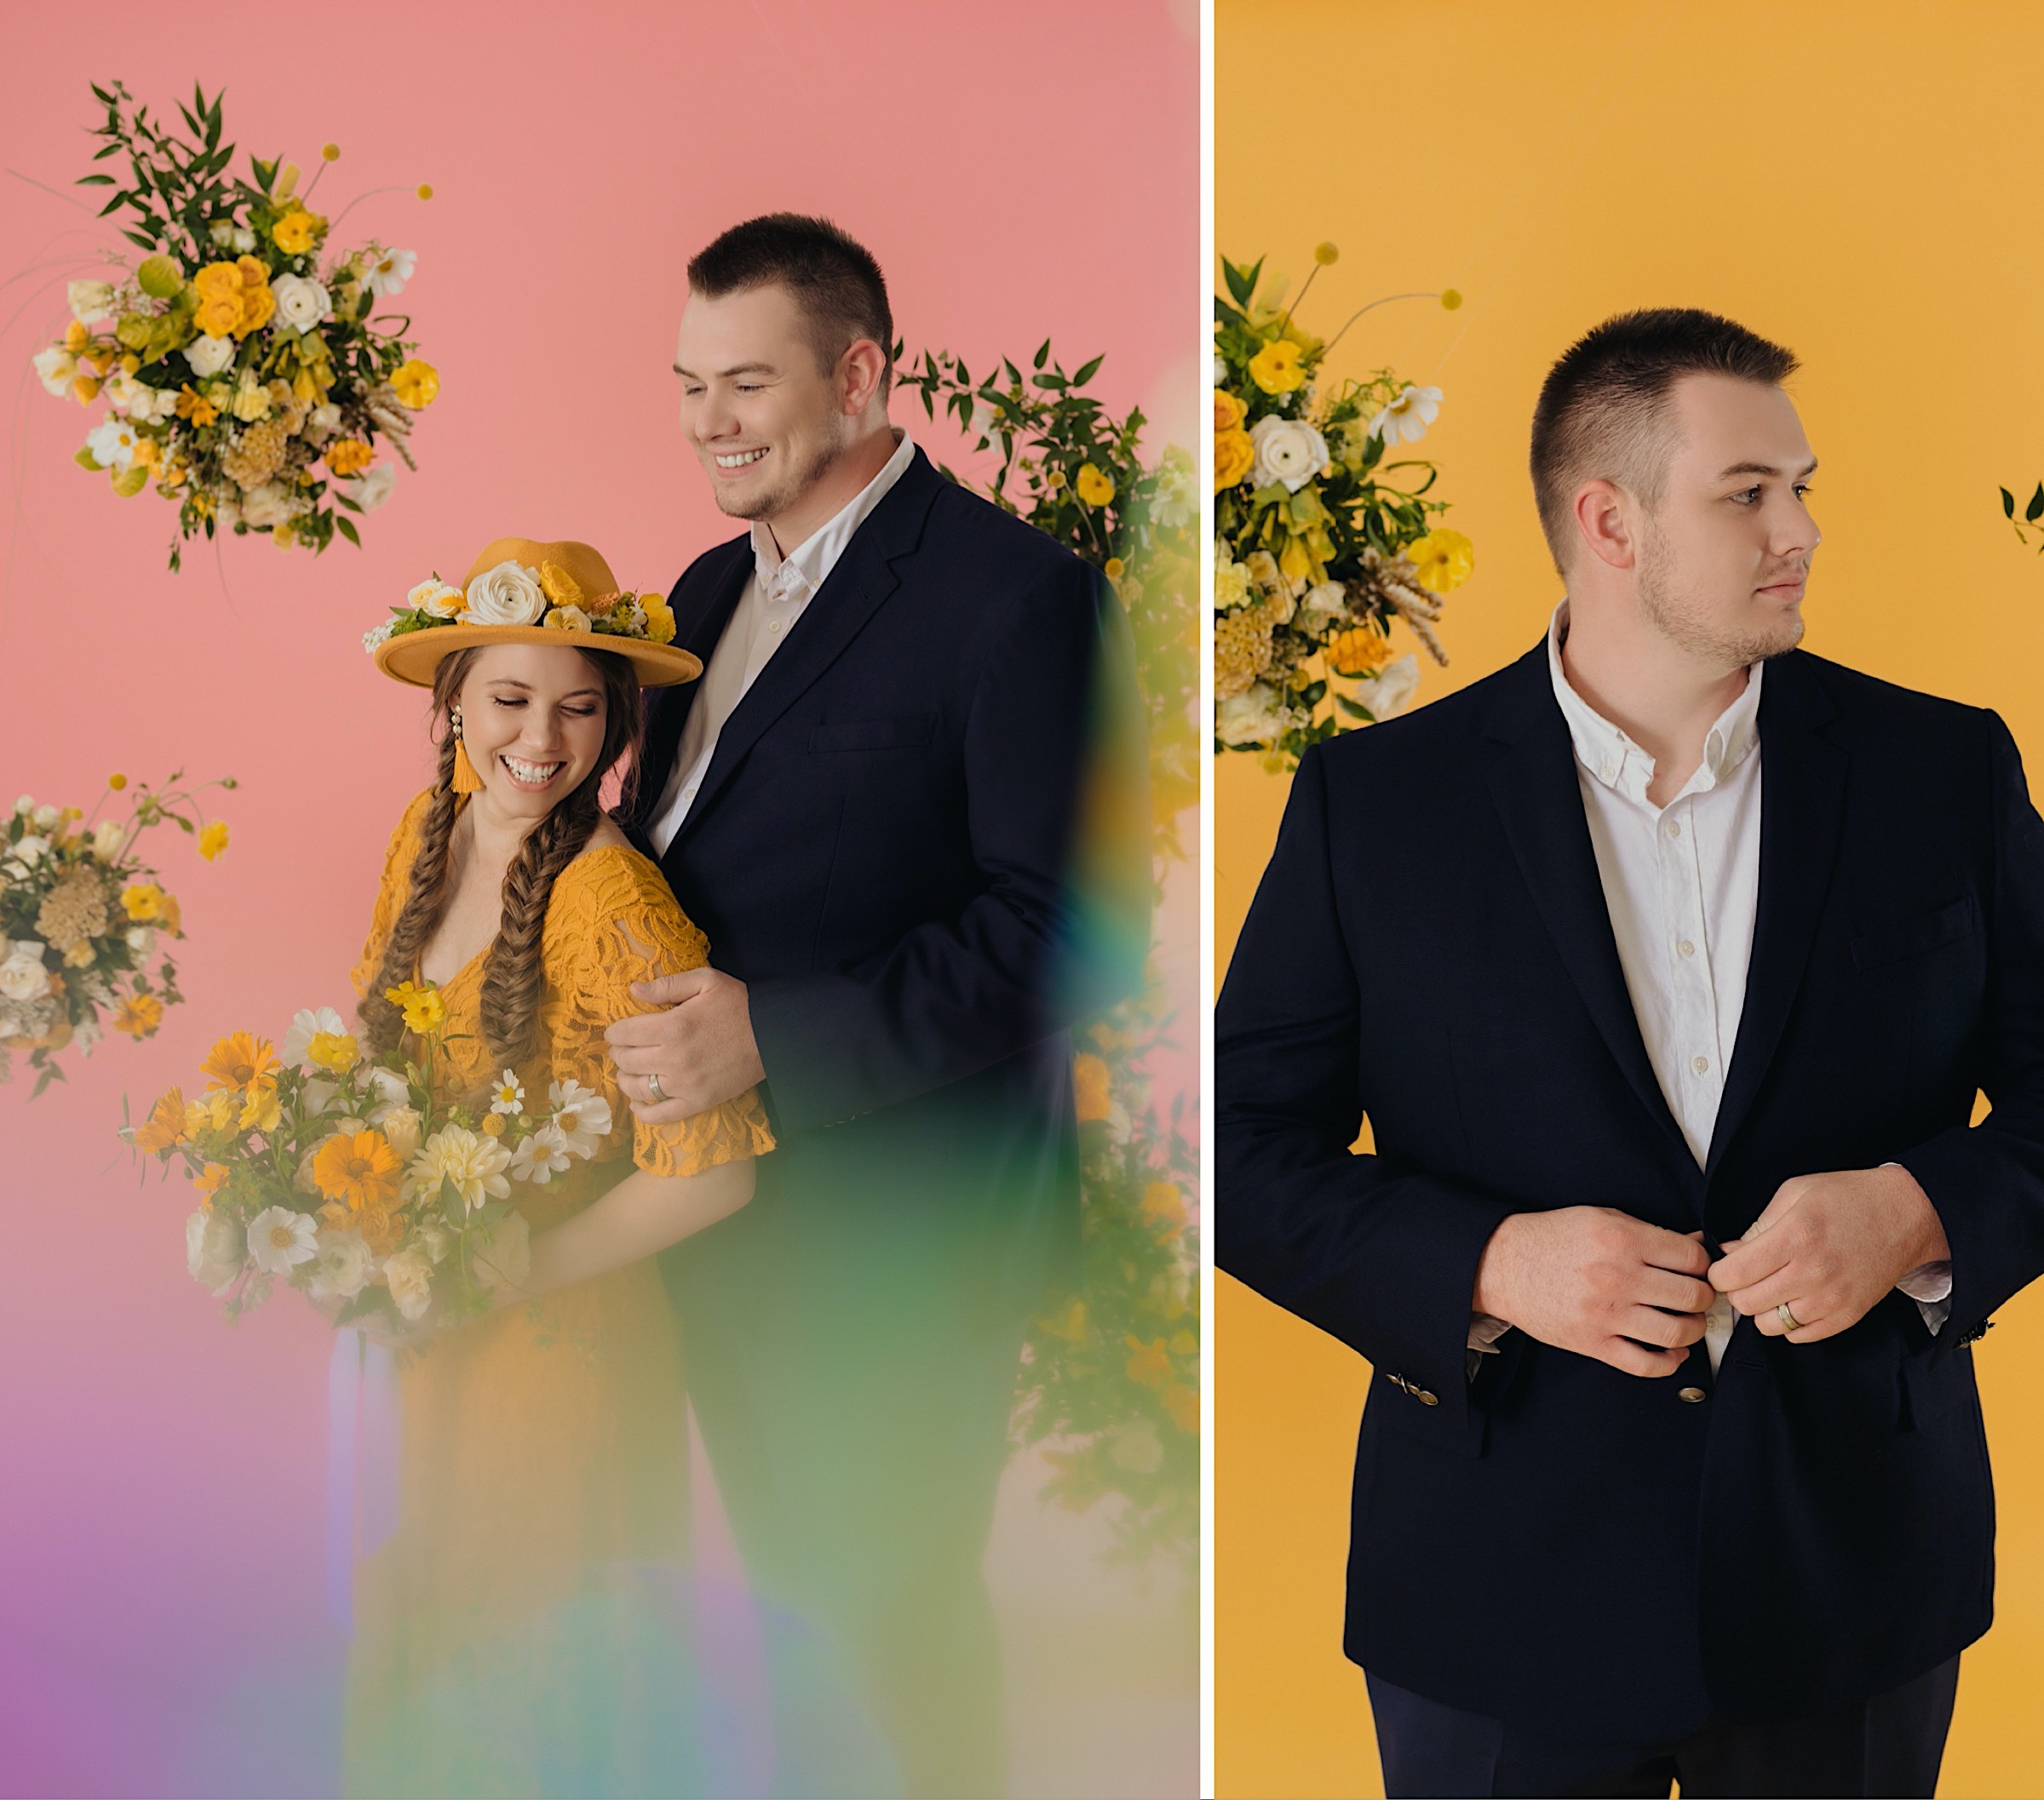 styled-wedding-shoot-modern-yellow-background-blue-floral-installation-colorful-sleek-wedding-dress-flower-open-back